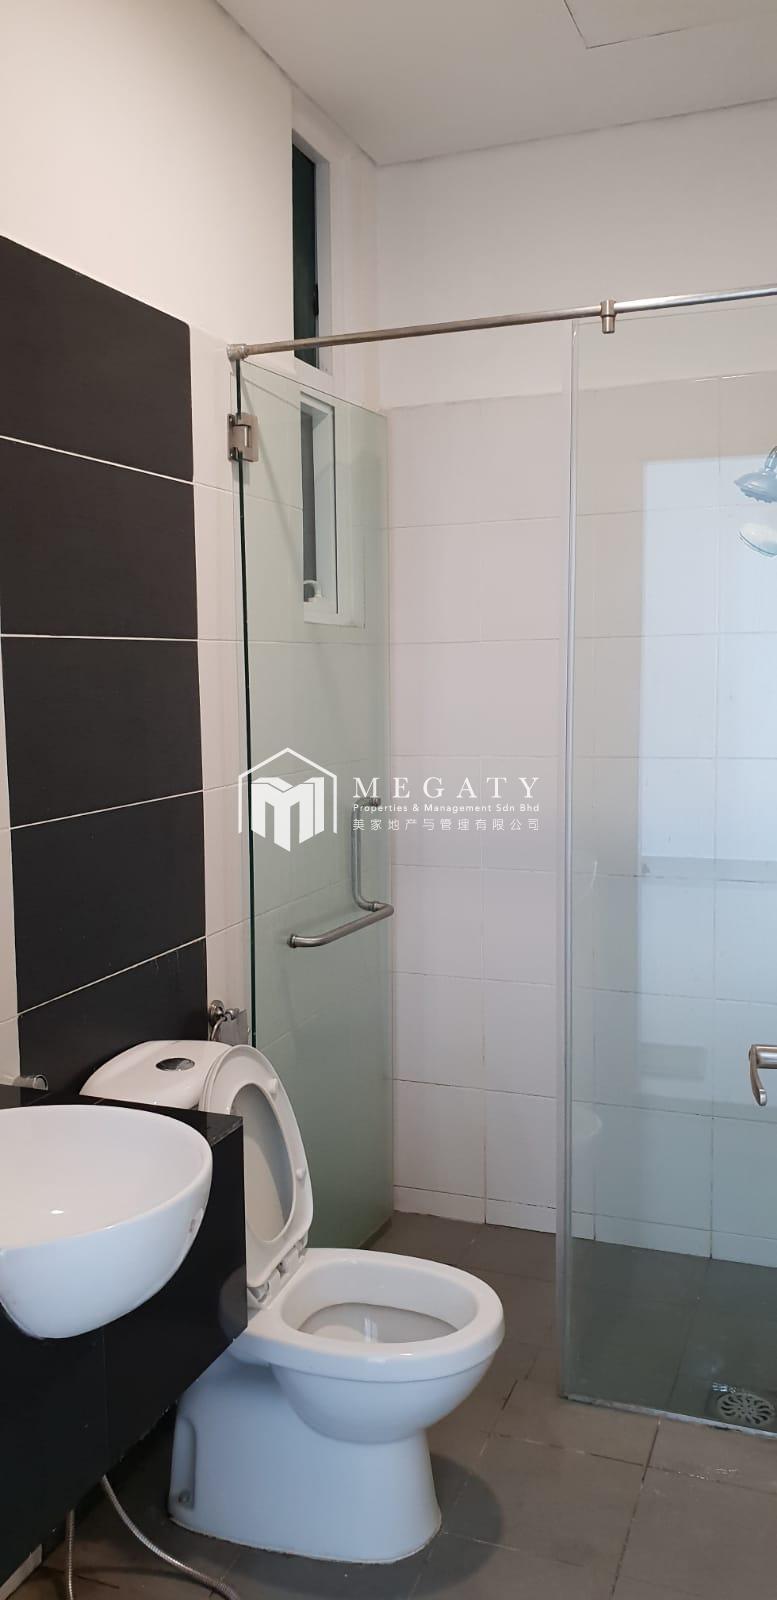 Megaty Property - FOR SALE

One Medini Service Apartment
@ Persiaran Medini Utara 3, 79000, Iskandar Puteri, JB